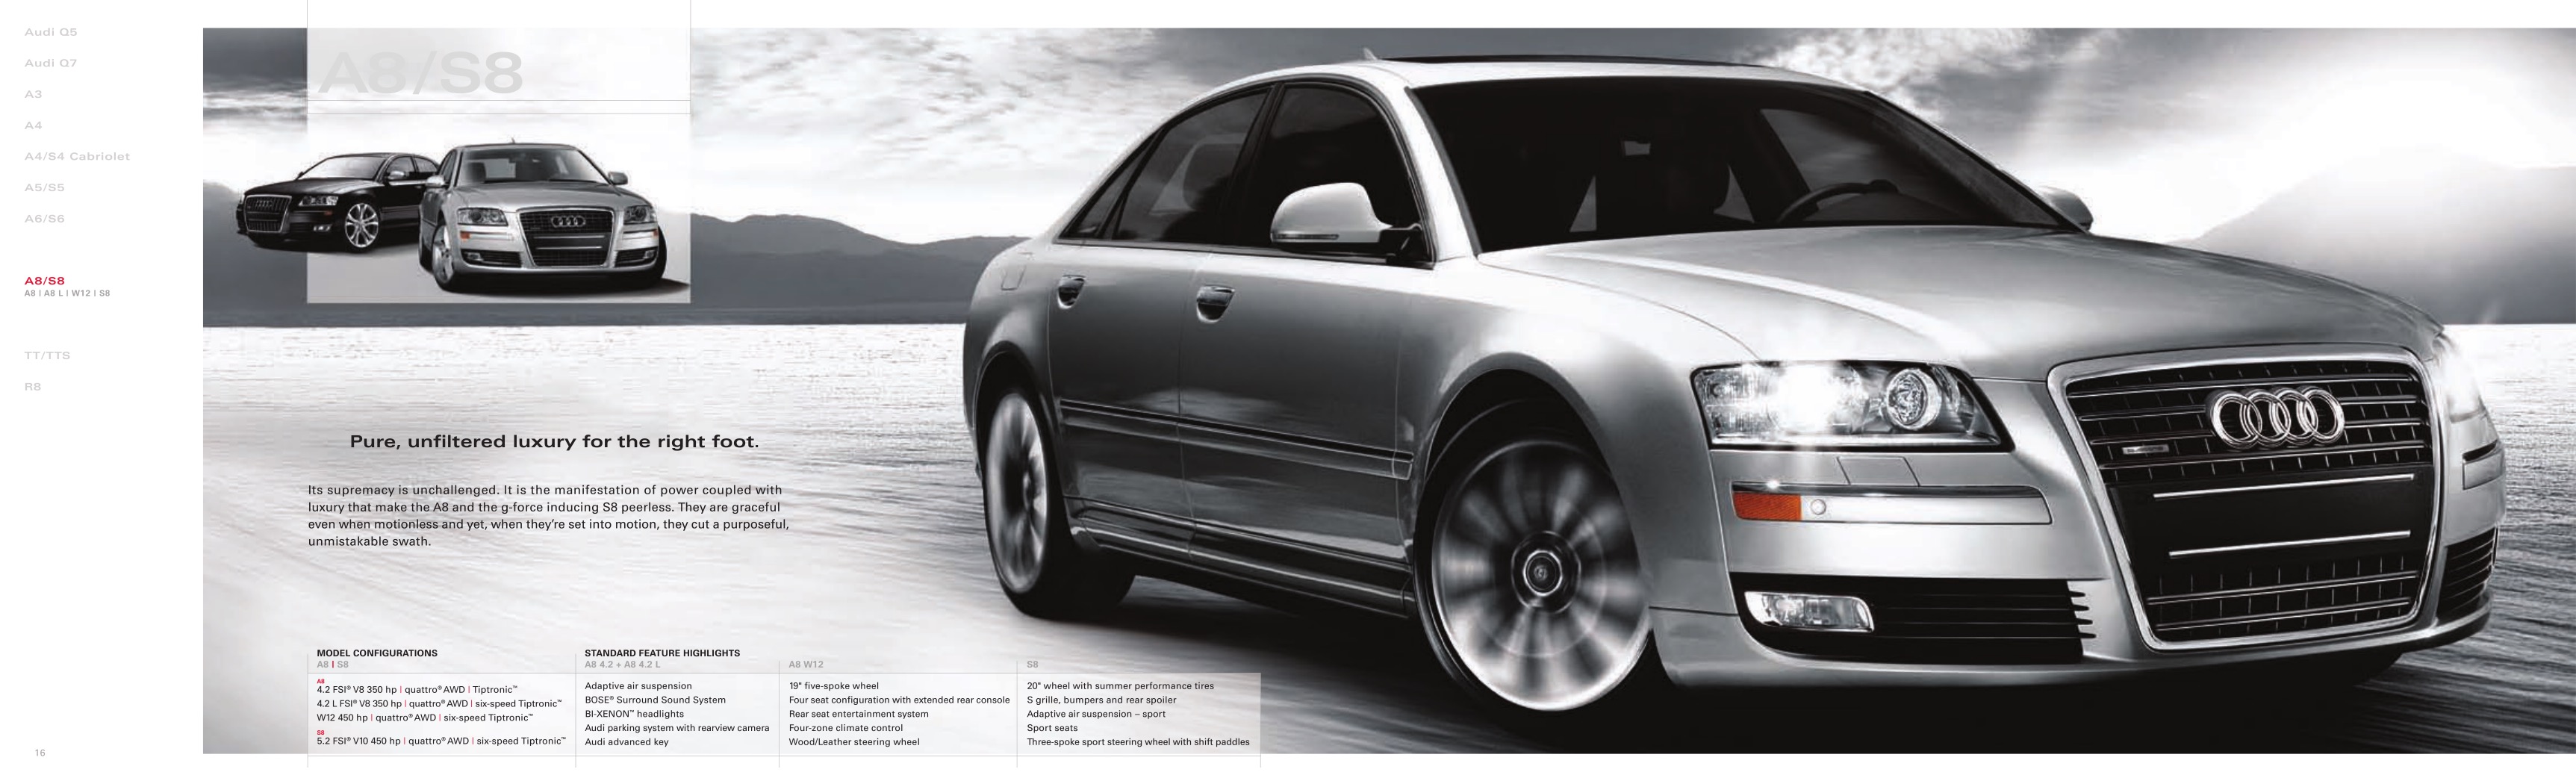 2009 Audi Brochure Page 5